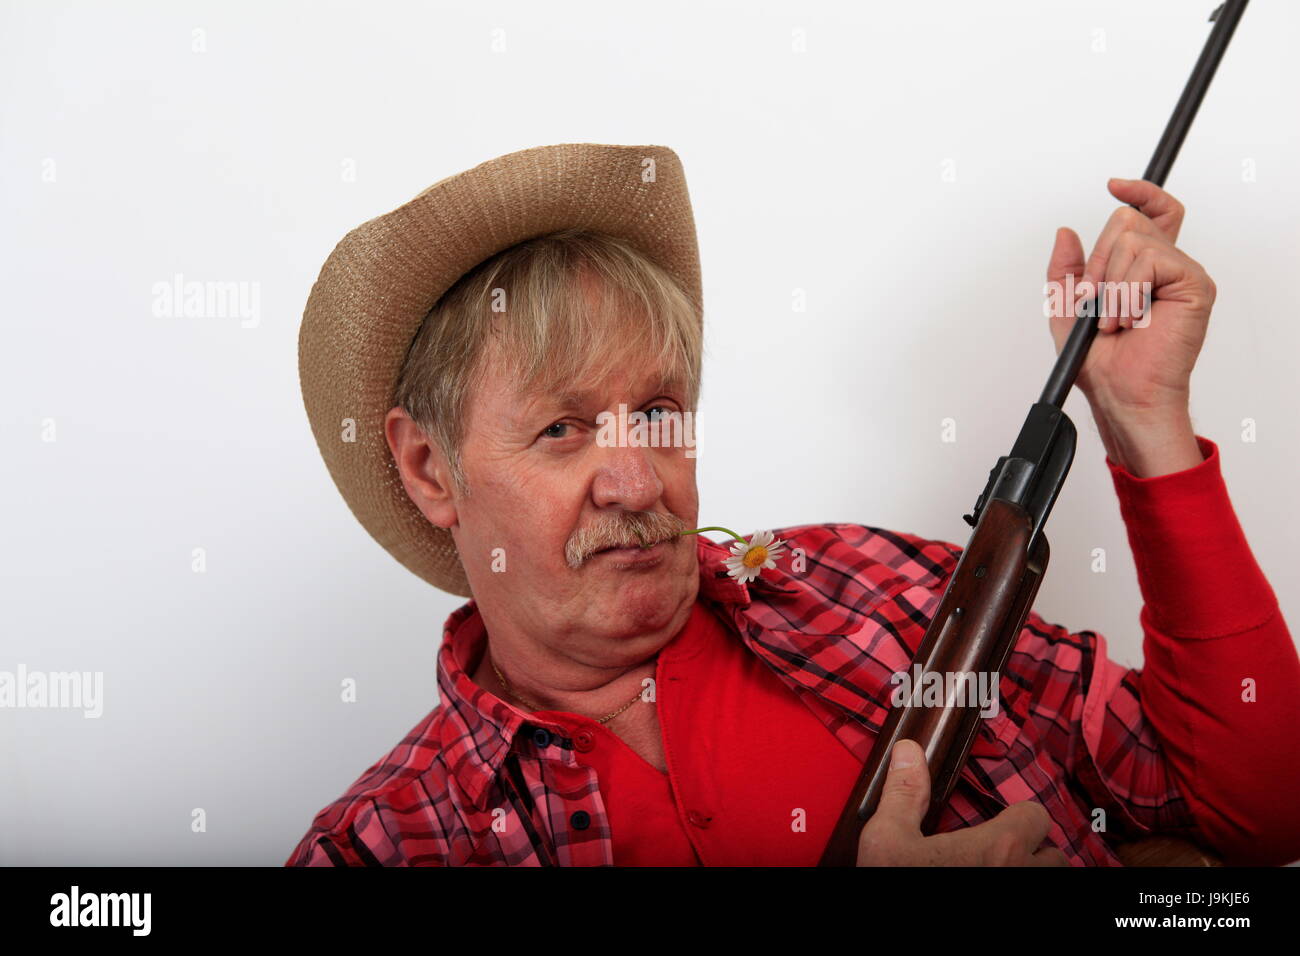 Stick Figure shooter man with gun and ear - Stock Illustration  [79342738] - PIXTA